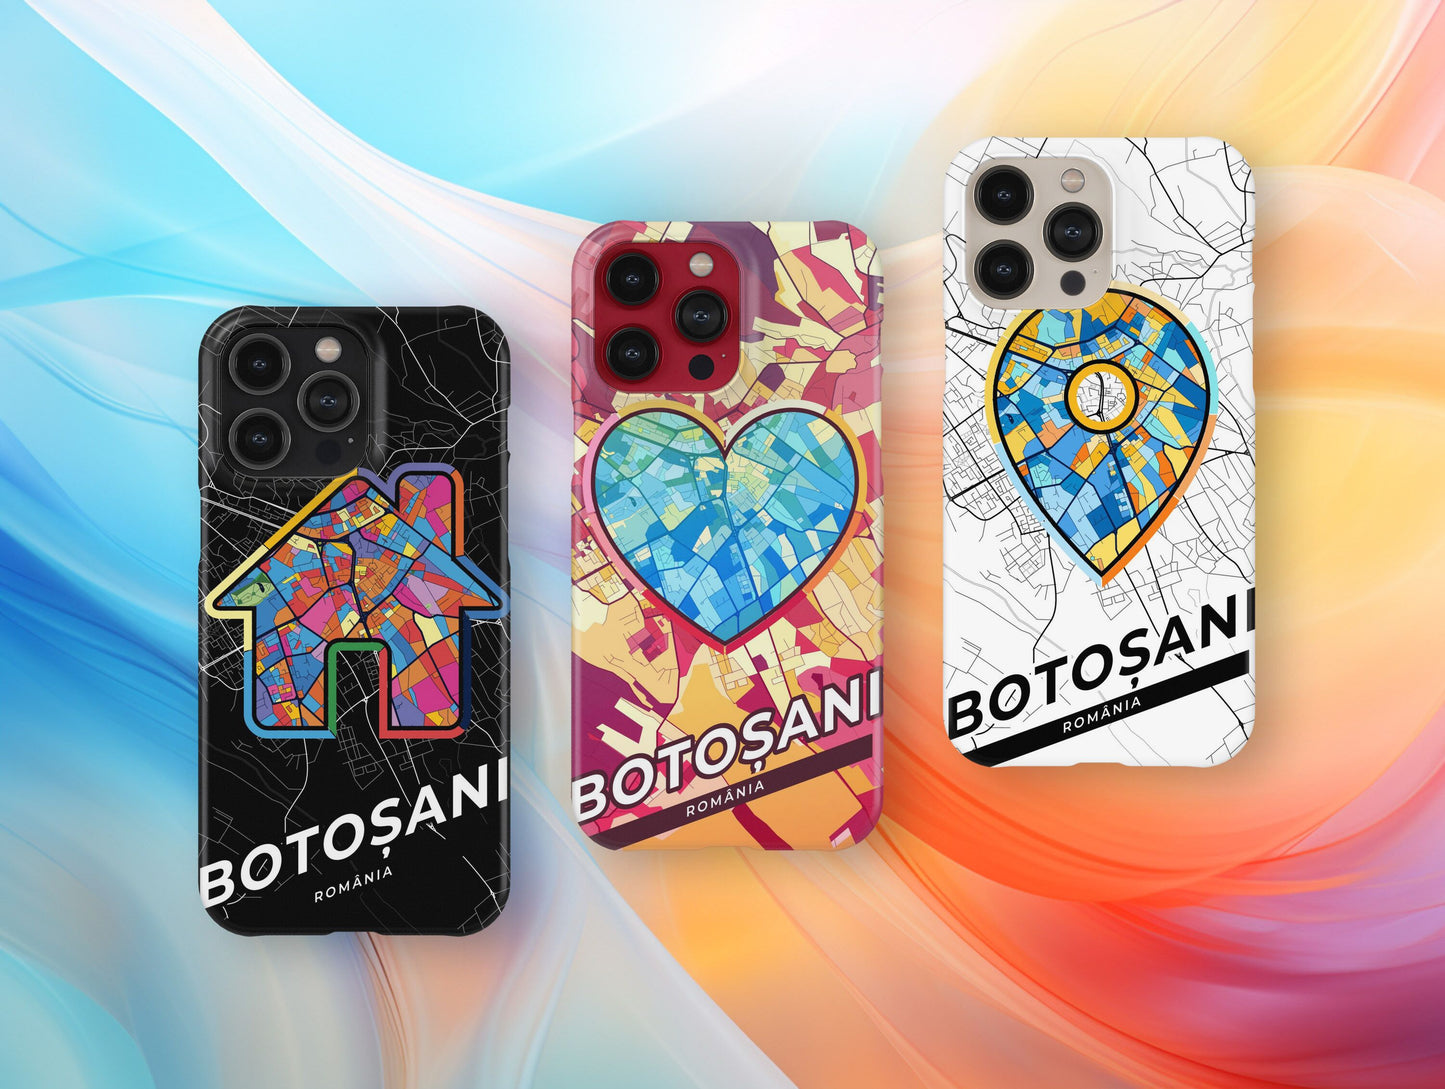 Botoșani Romania slim phone case with colorful icon. Birthday, wedding or housewarming gift. Couple match cases.